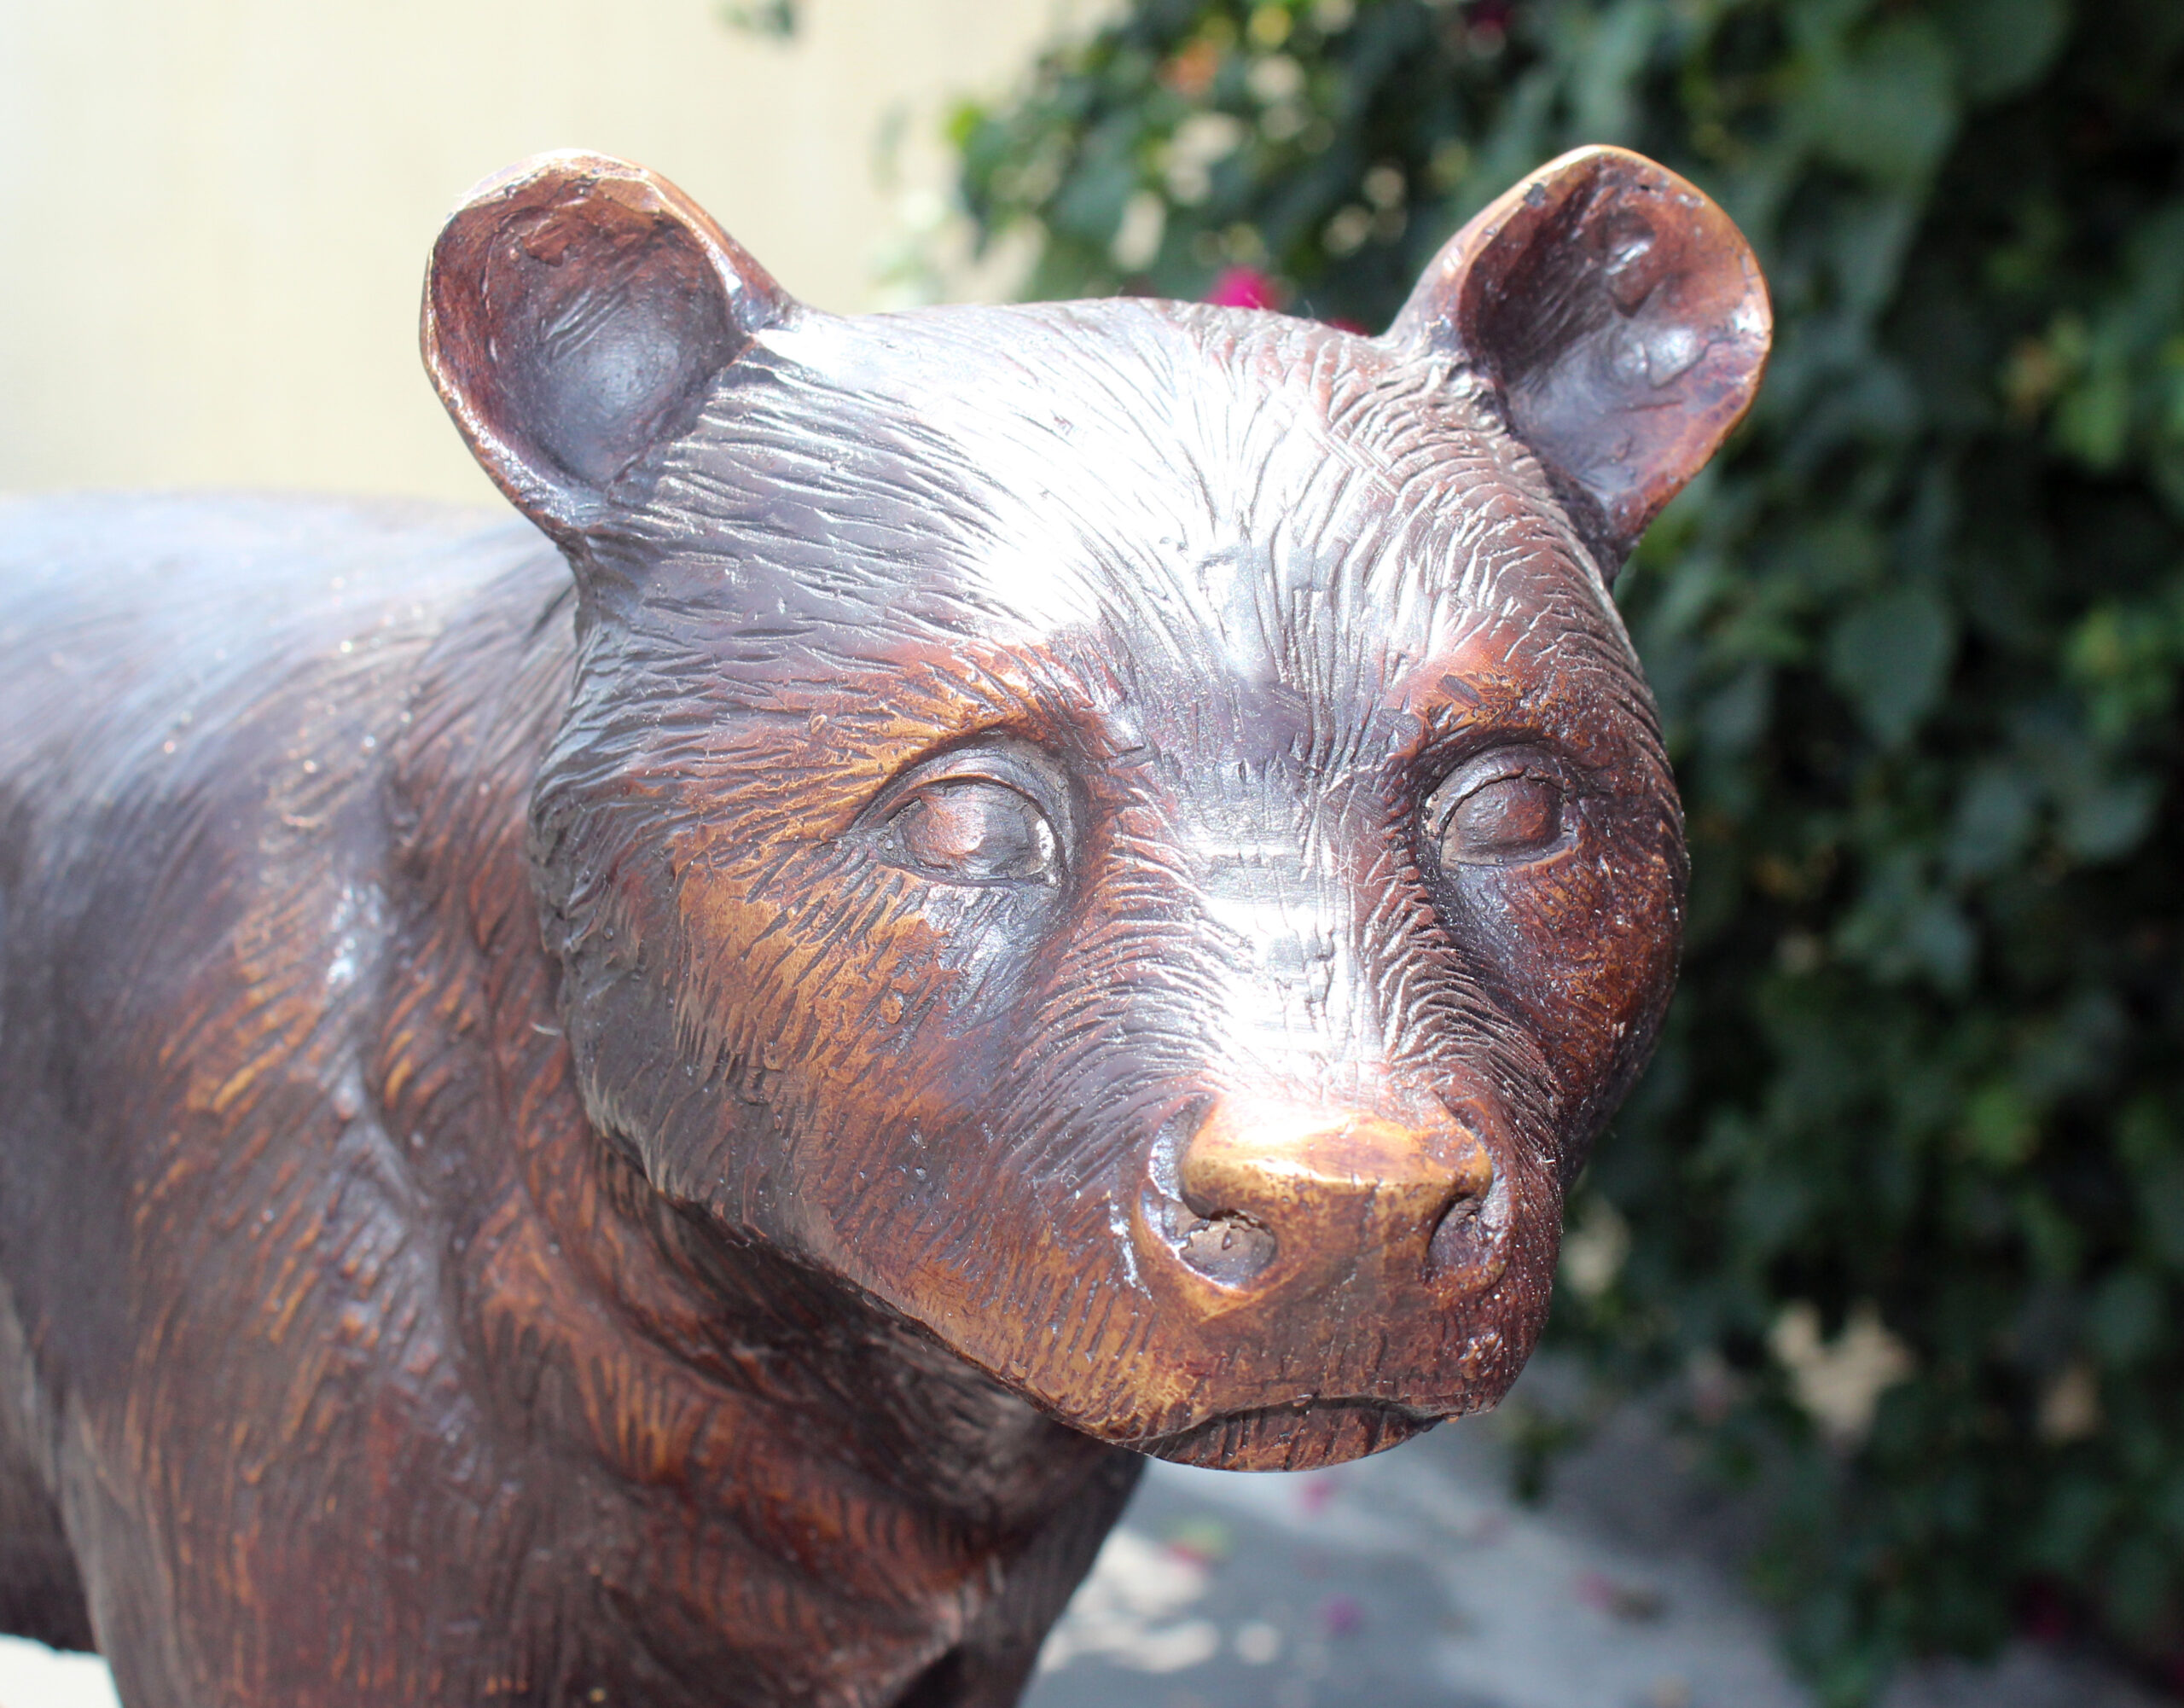 bronze bear hunting statue